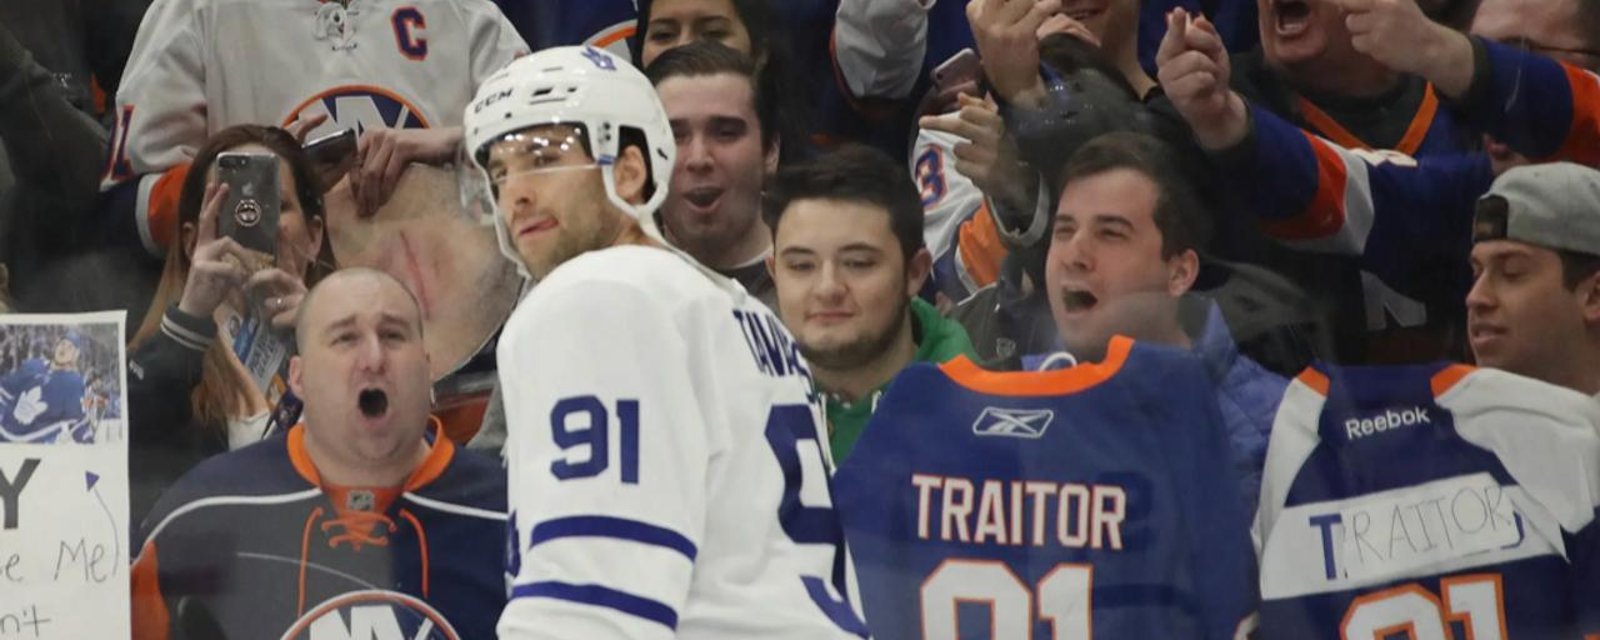 Fans hit back at Leafs captain John Tavares 